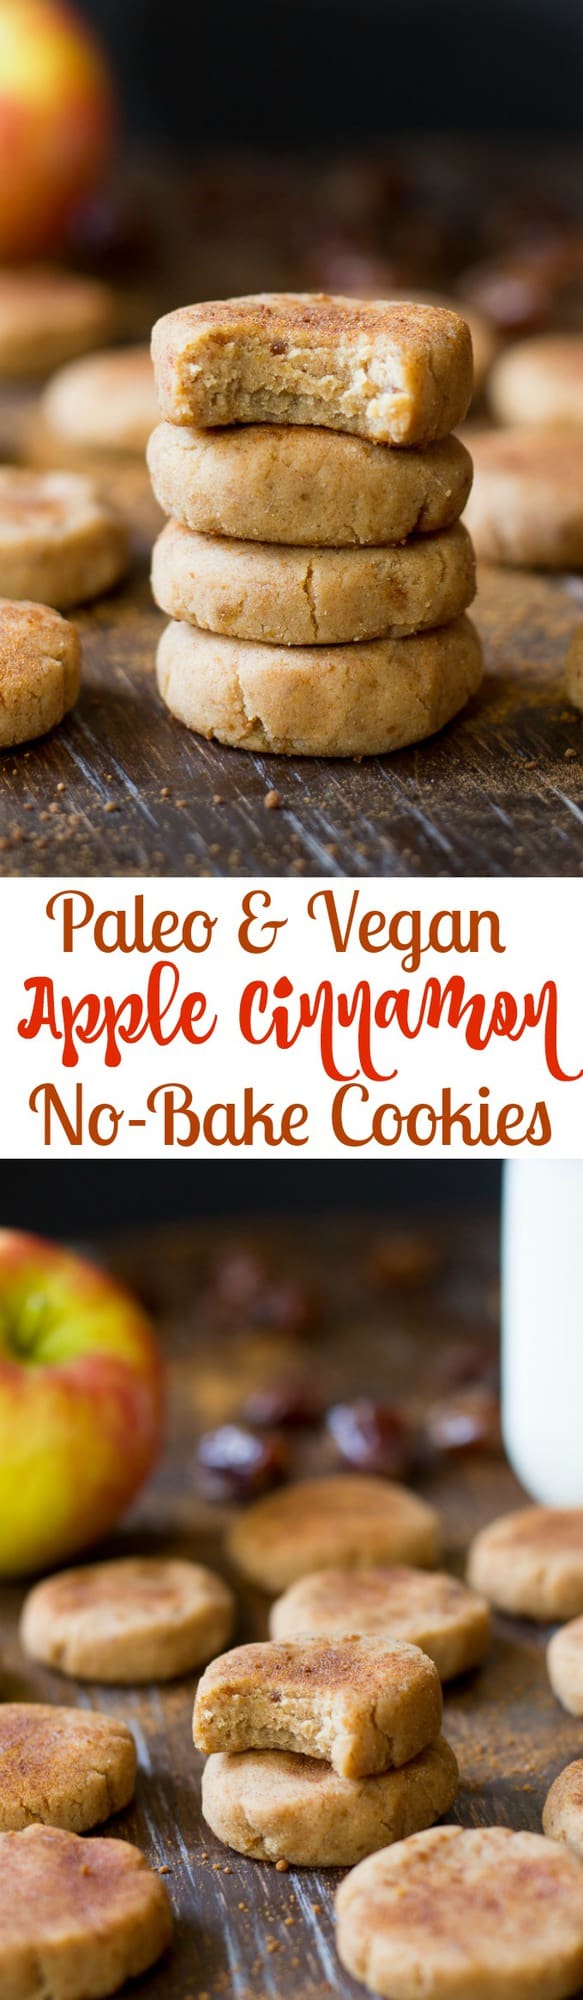 paleo-and-vegan-apple-cinnamon-no-bake-cookies